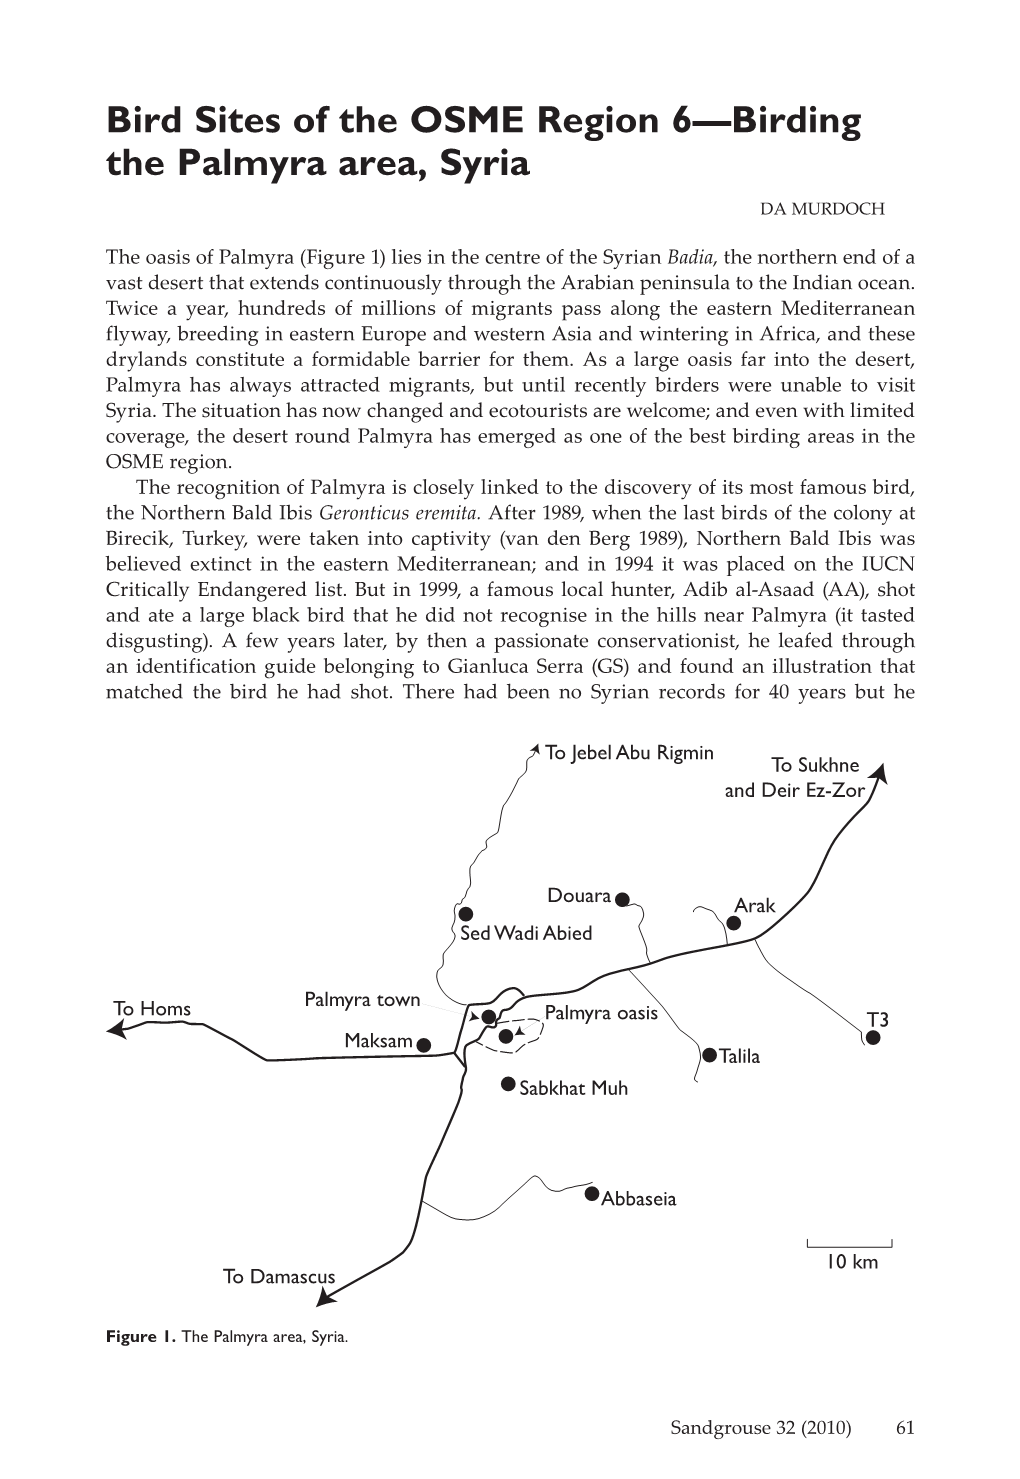 Bird Sites of the Osme Region 6—Birding the Palmyra Area, Syria DA MURDOCH